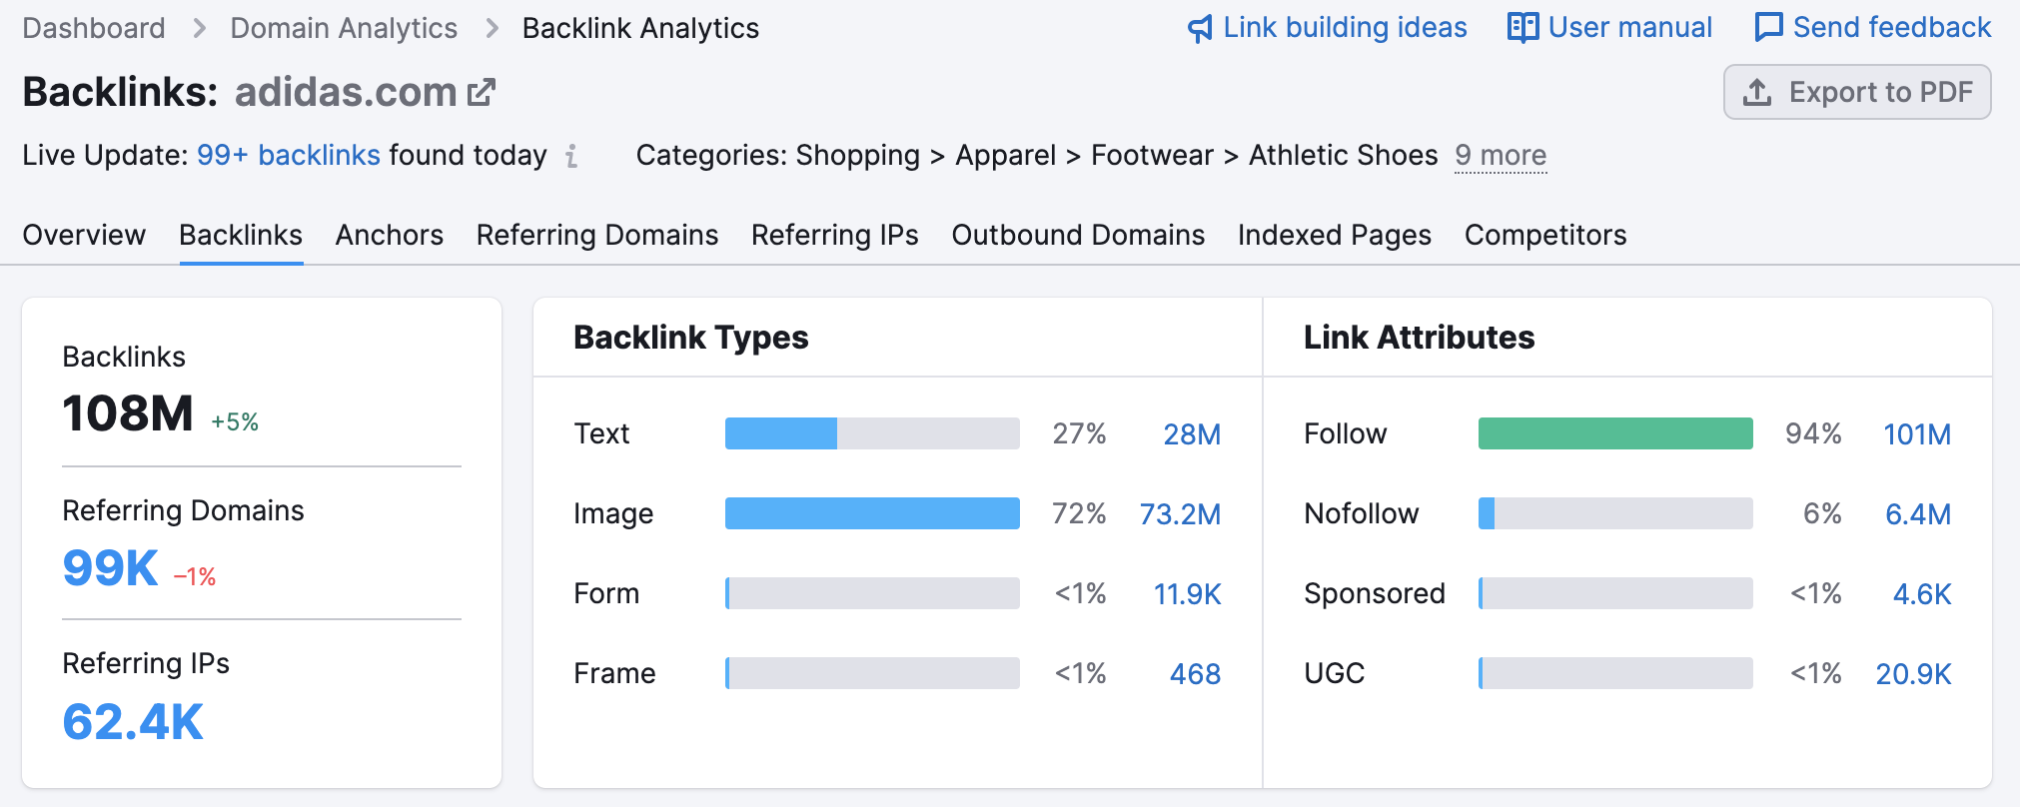 Adidas backlinks overview from Semrush Backlink Analytics